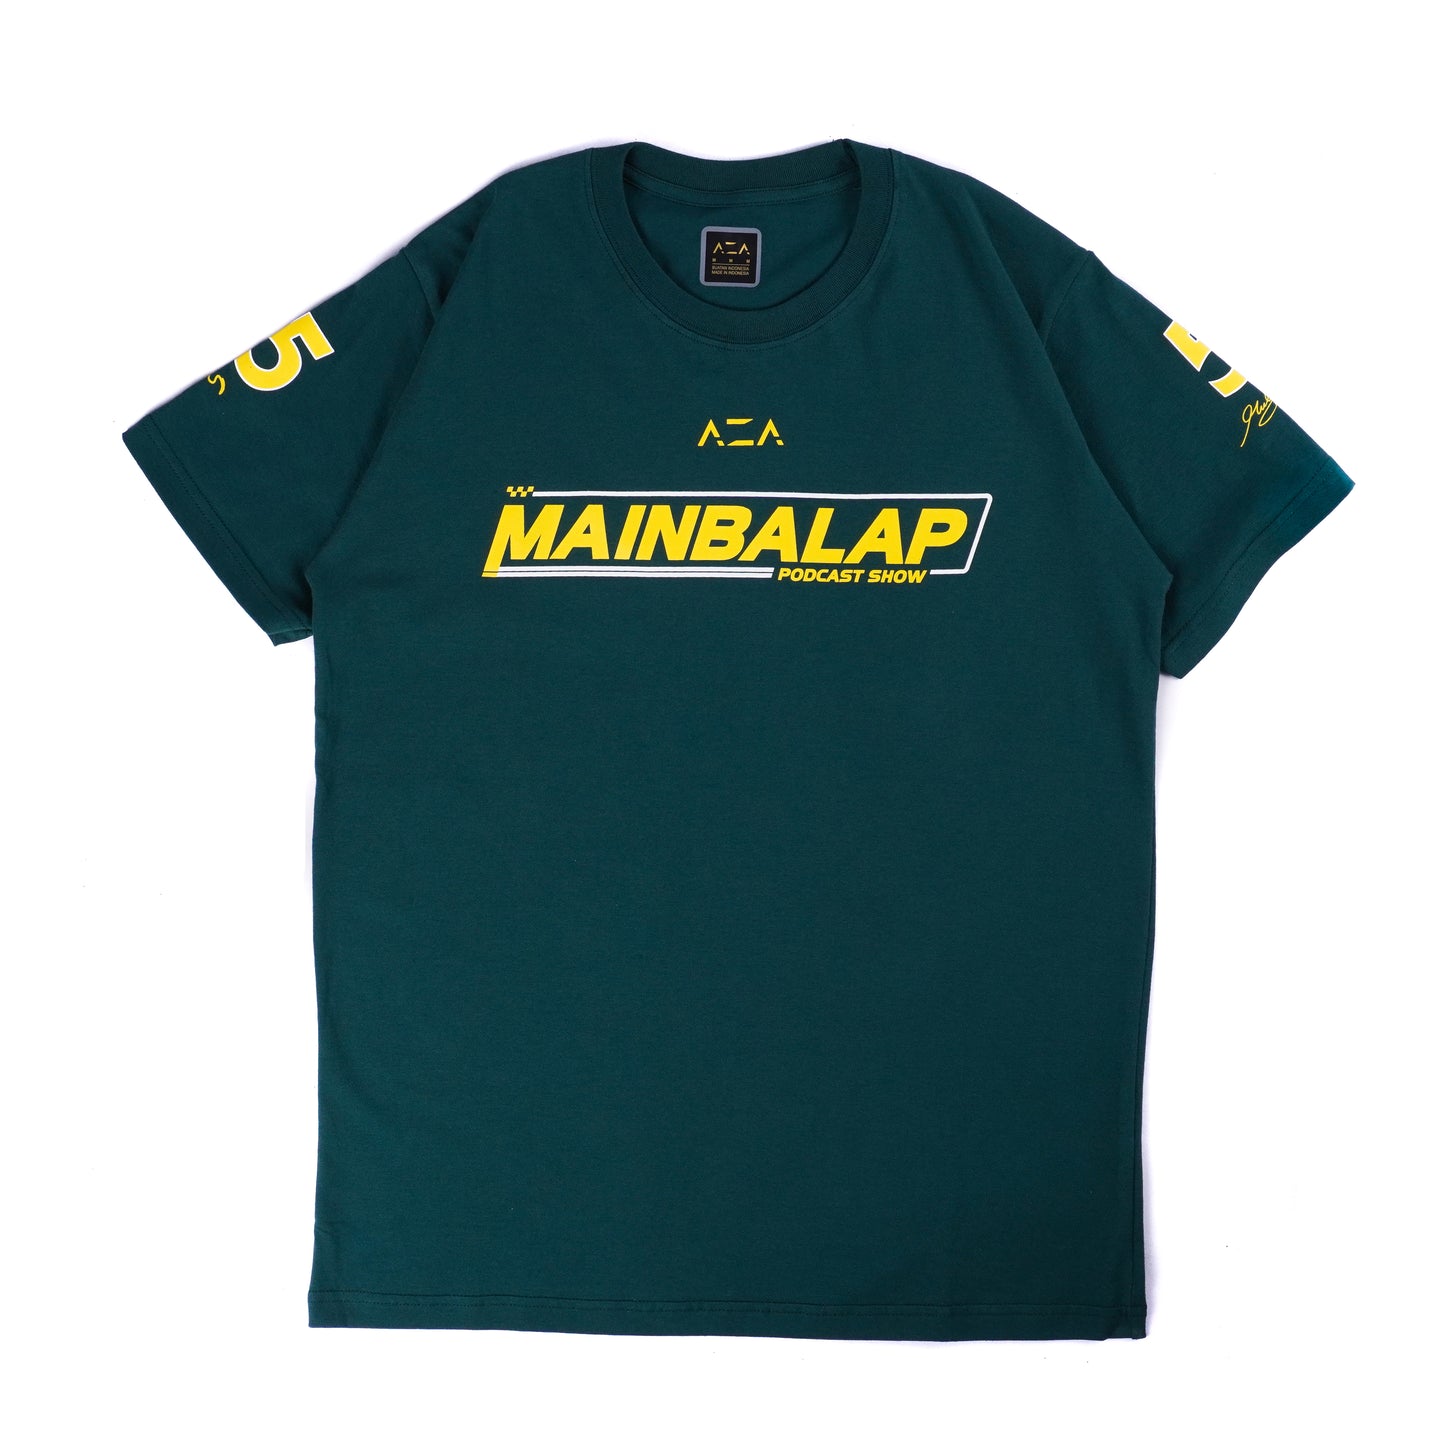 AZA x MAINBALAP Podcast Show T-Shirt - Green